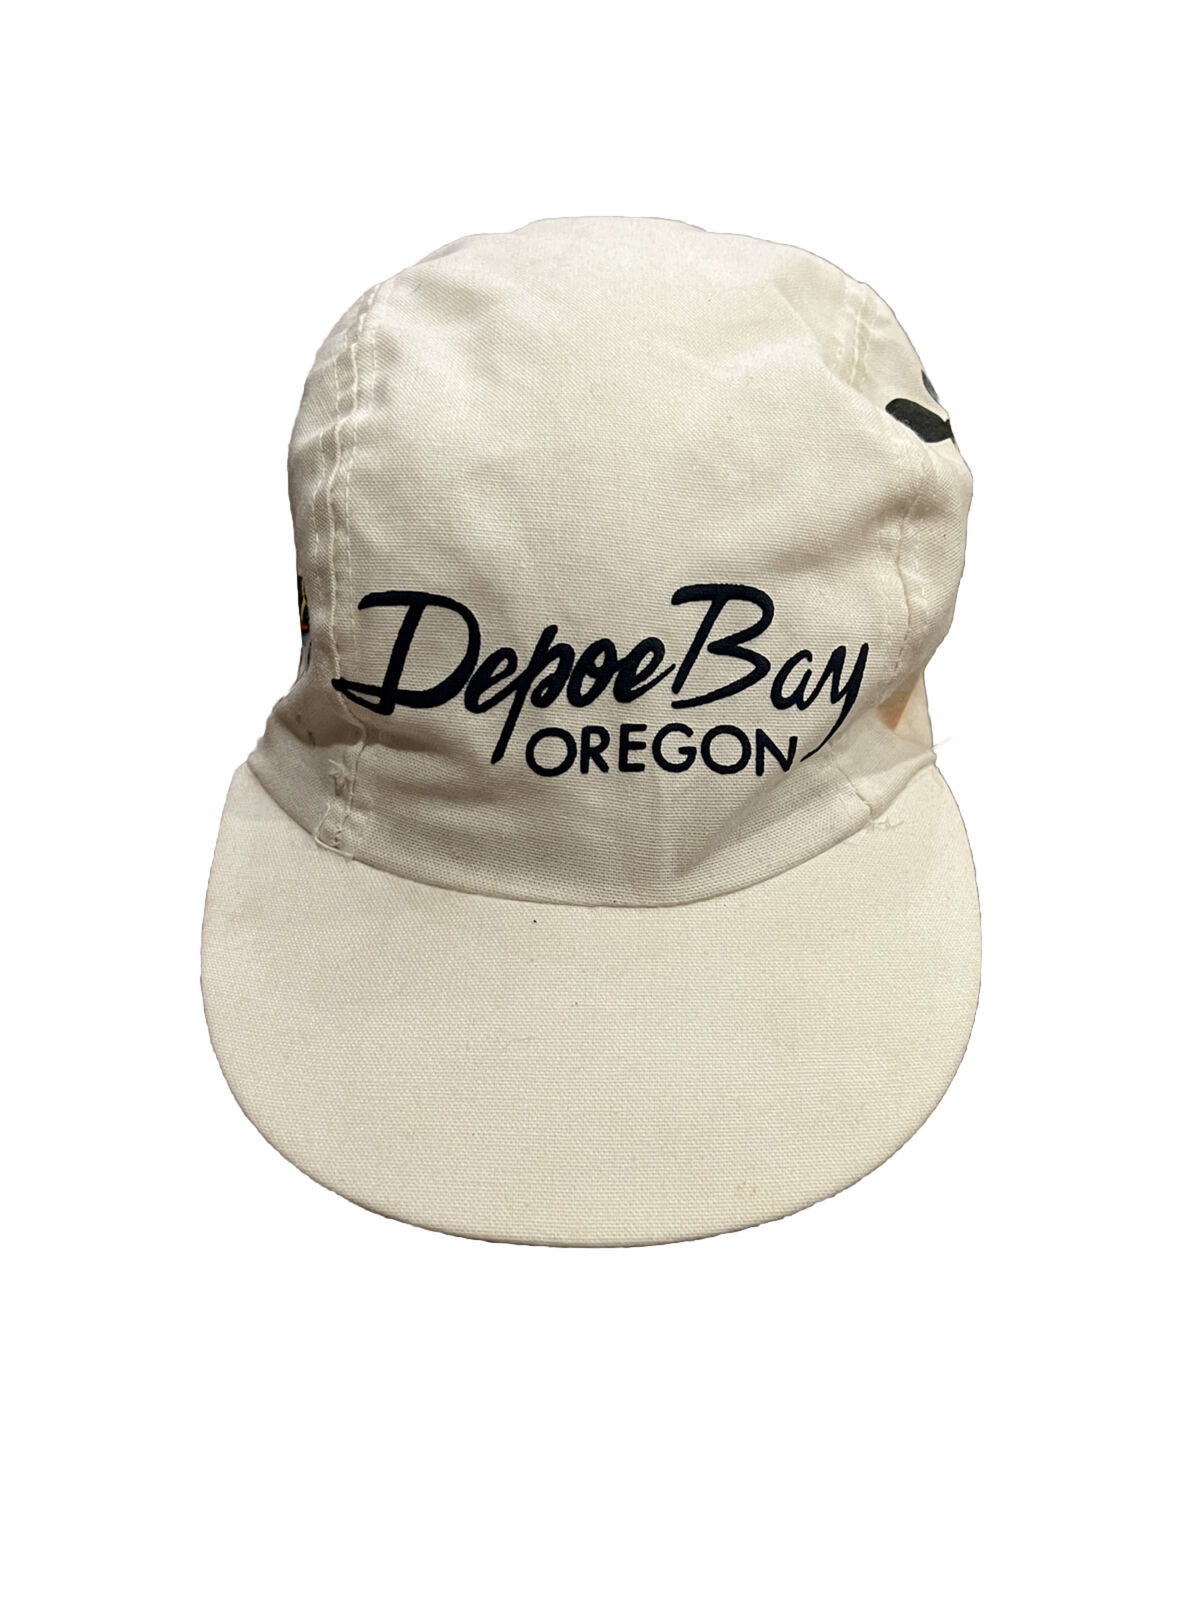 Vintage 80s 90s Unisex White Disney Depoe Bay Oregon Stretch Adjustable Hat Cap